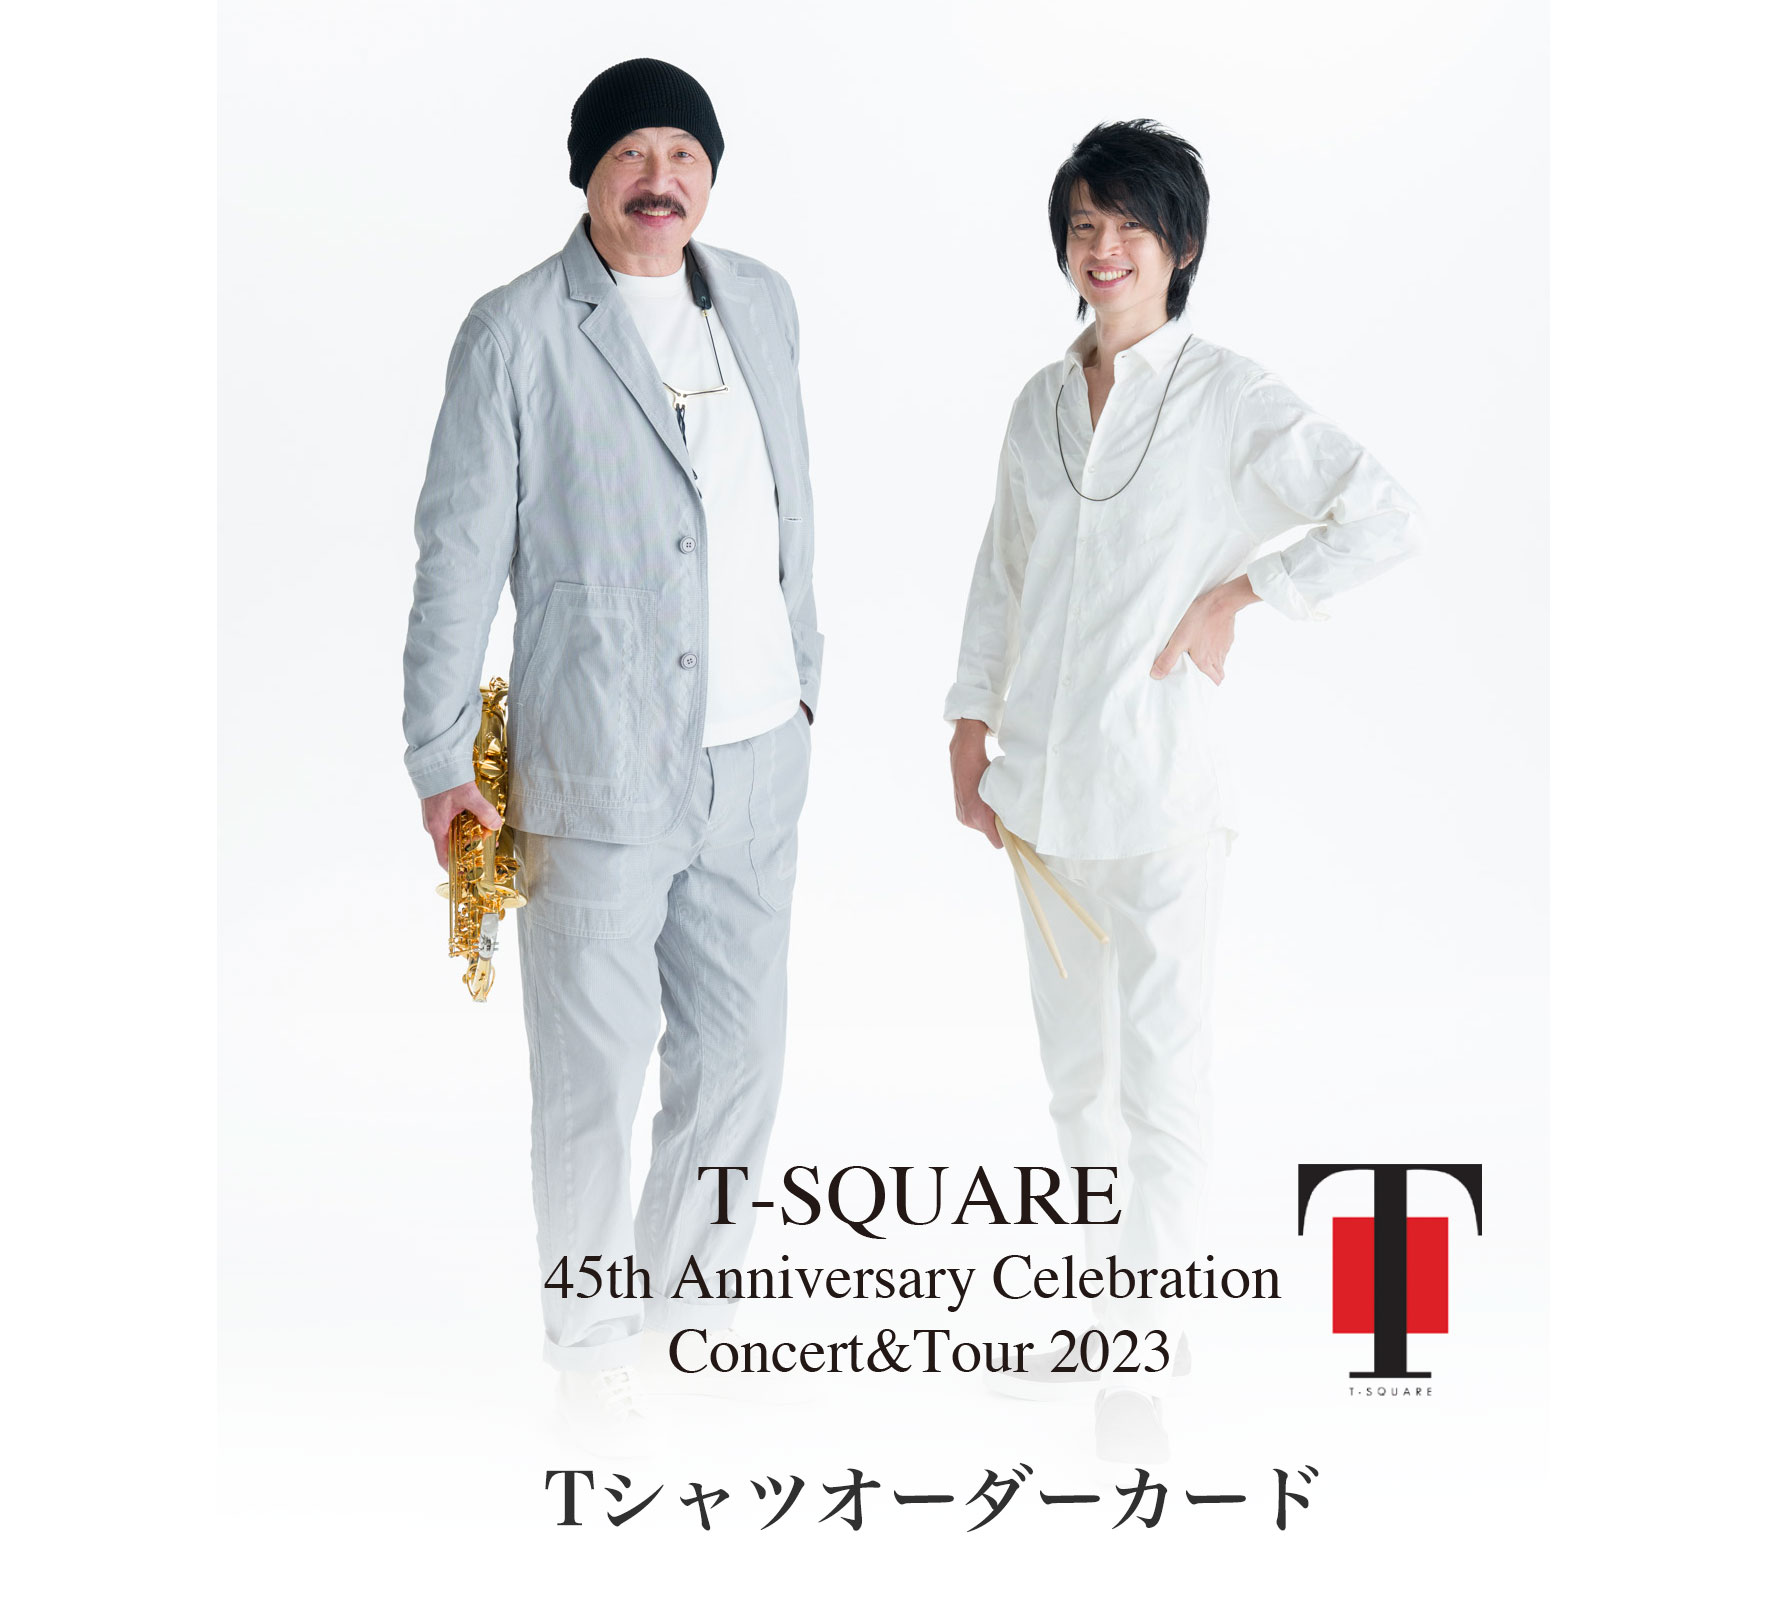 T-SQUARE「45th Anniversary Celebration Concert&Tour 2023」 Tシャツオーダーカード